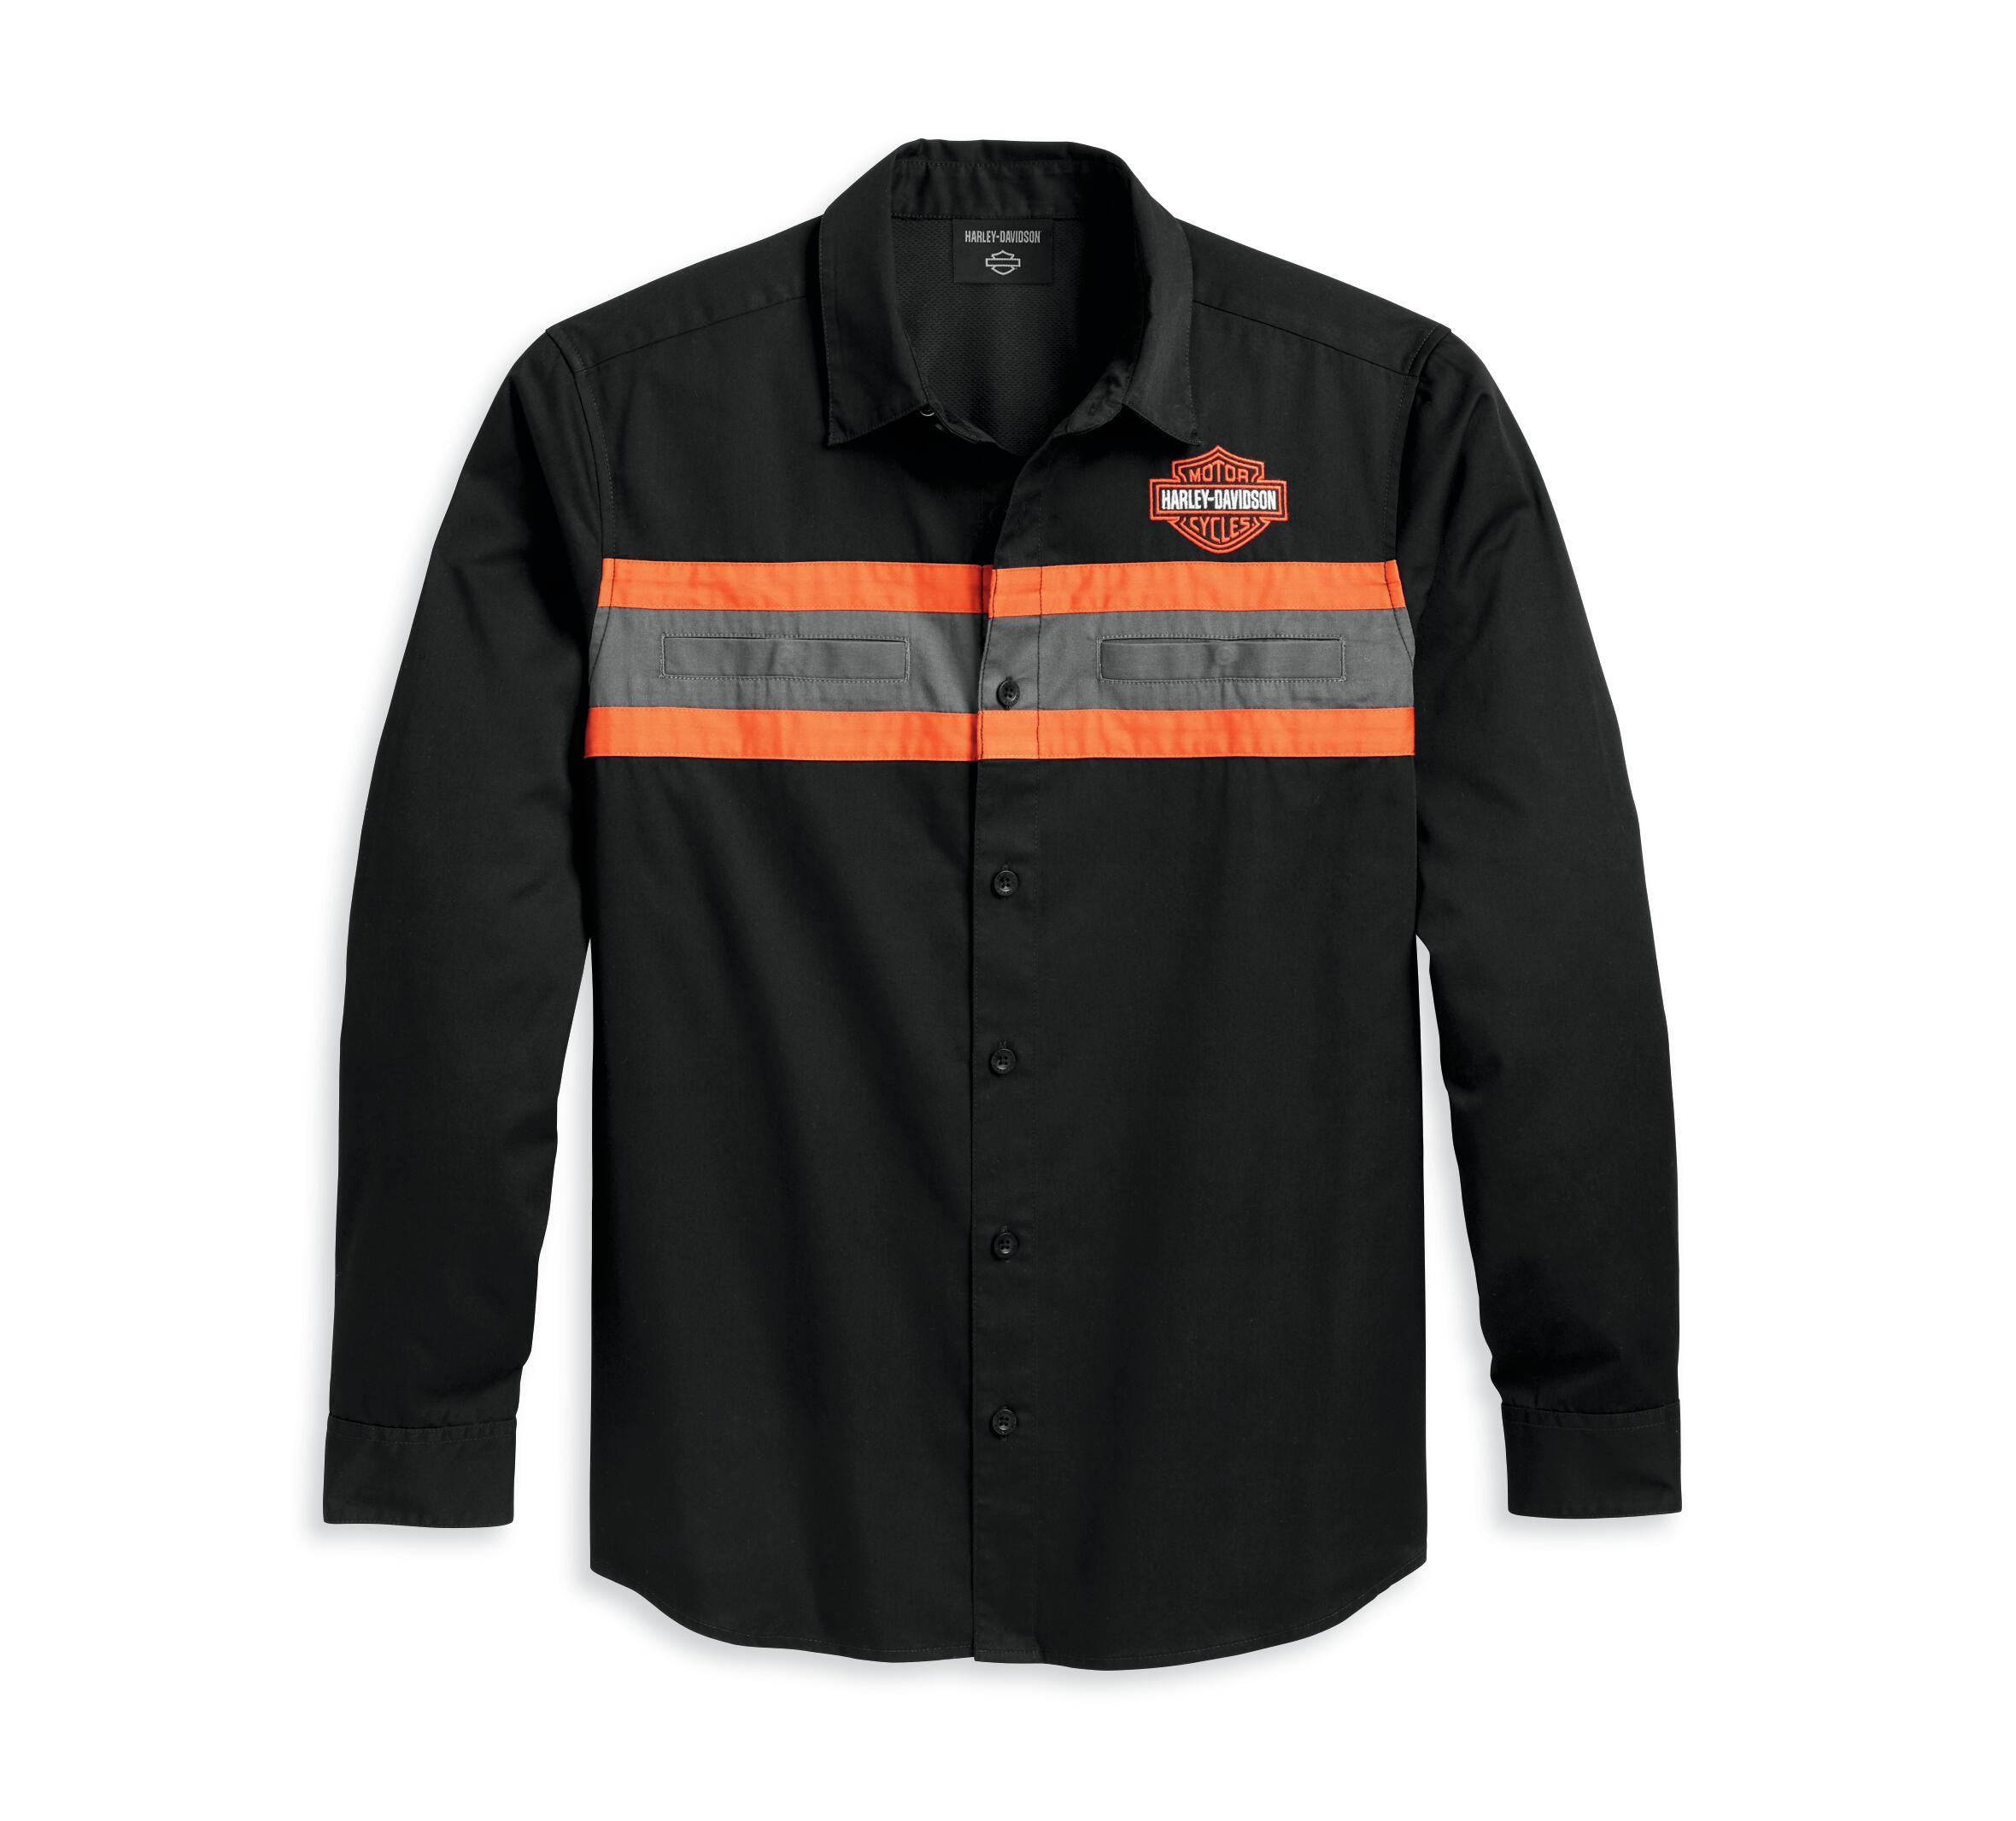 Harley-Davidson Men's Harley Performance Shirt Colorblocked, Black - 9